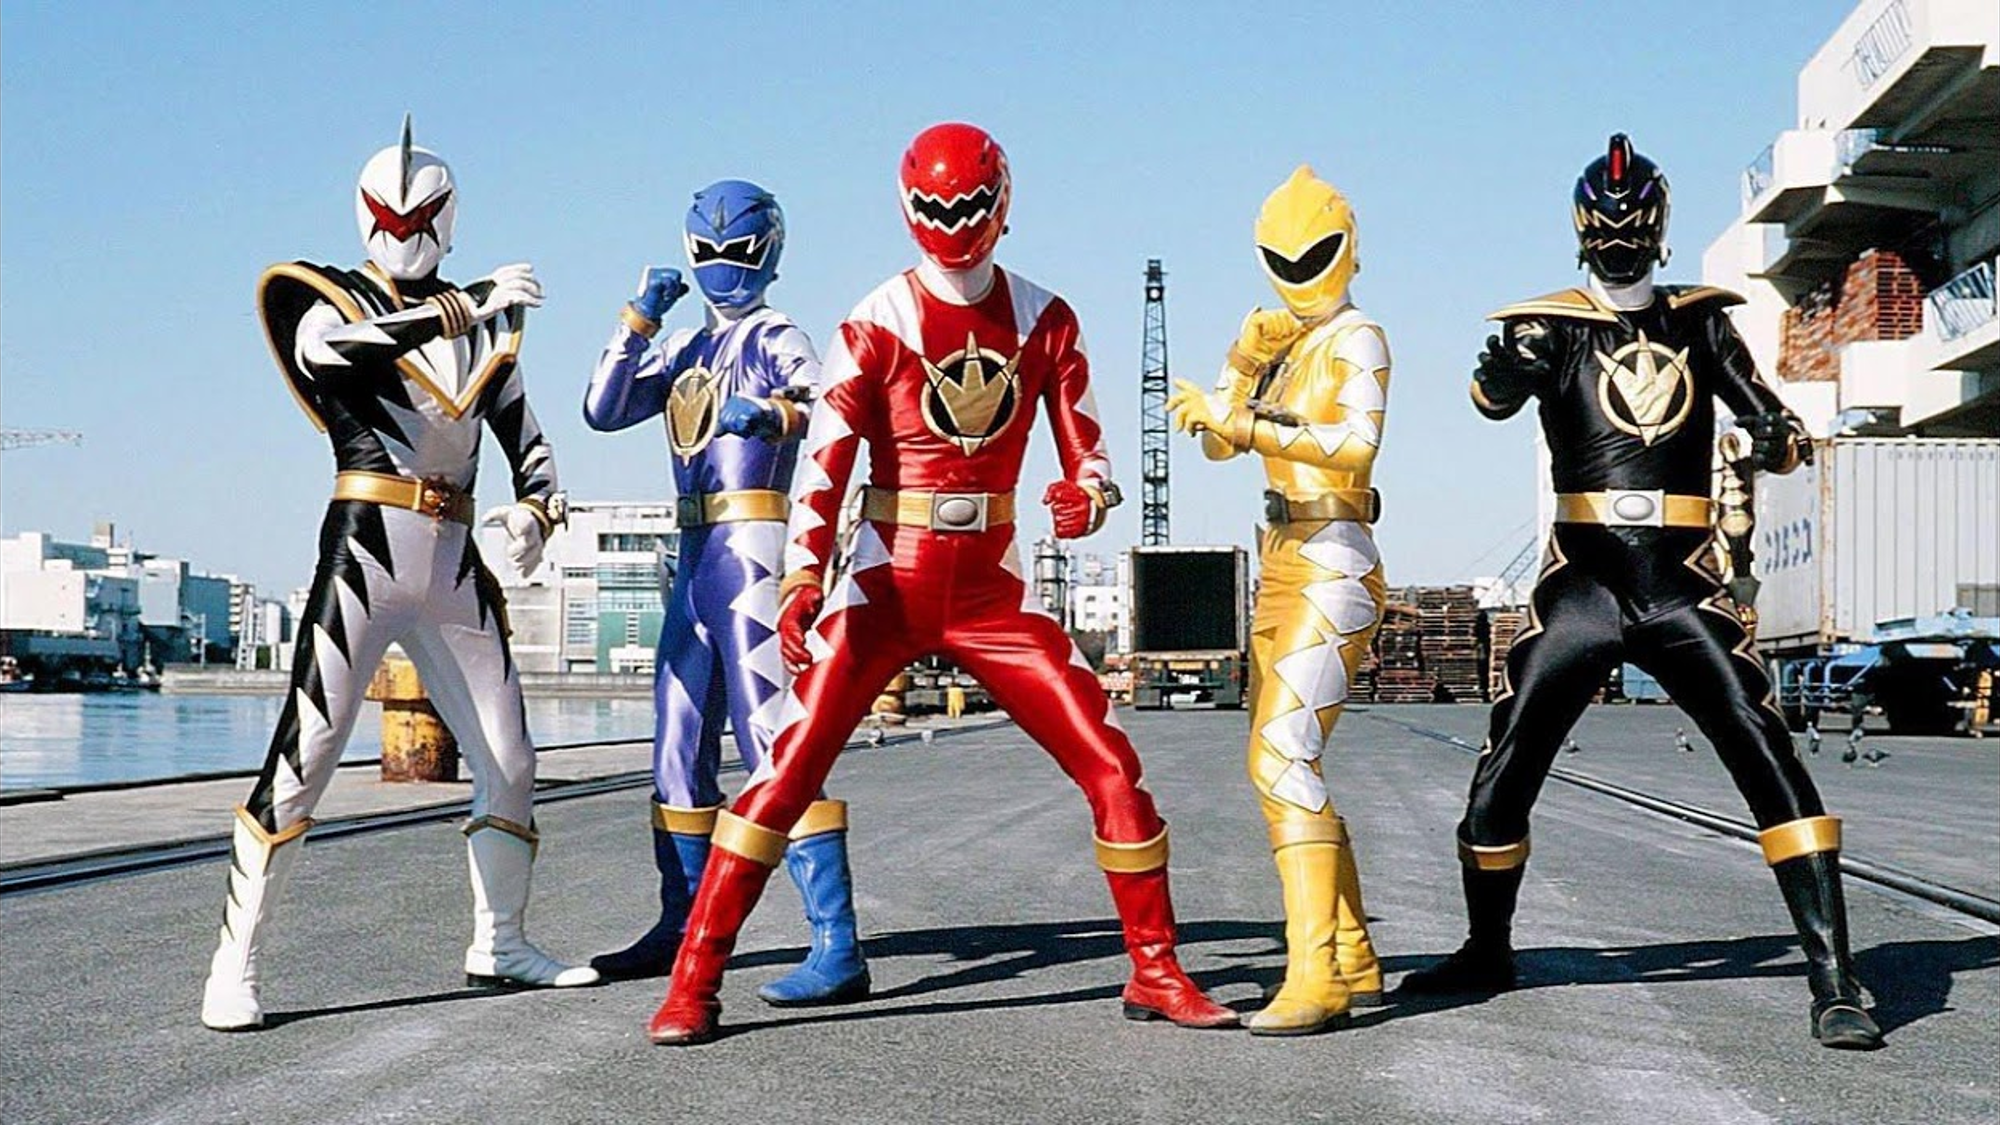 Fandom Spotlight: Power Rangers, Super Sentai, and other Tokusatsu